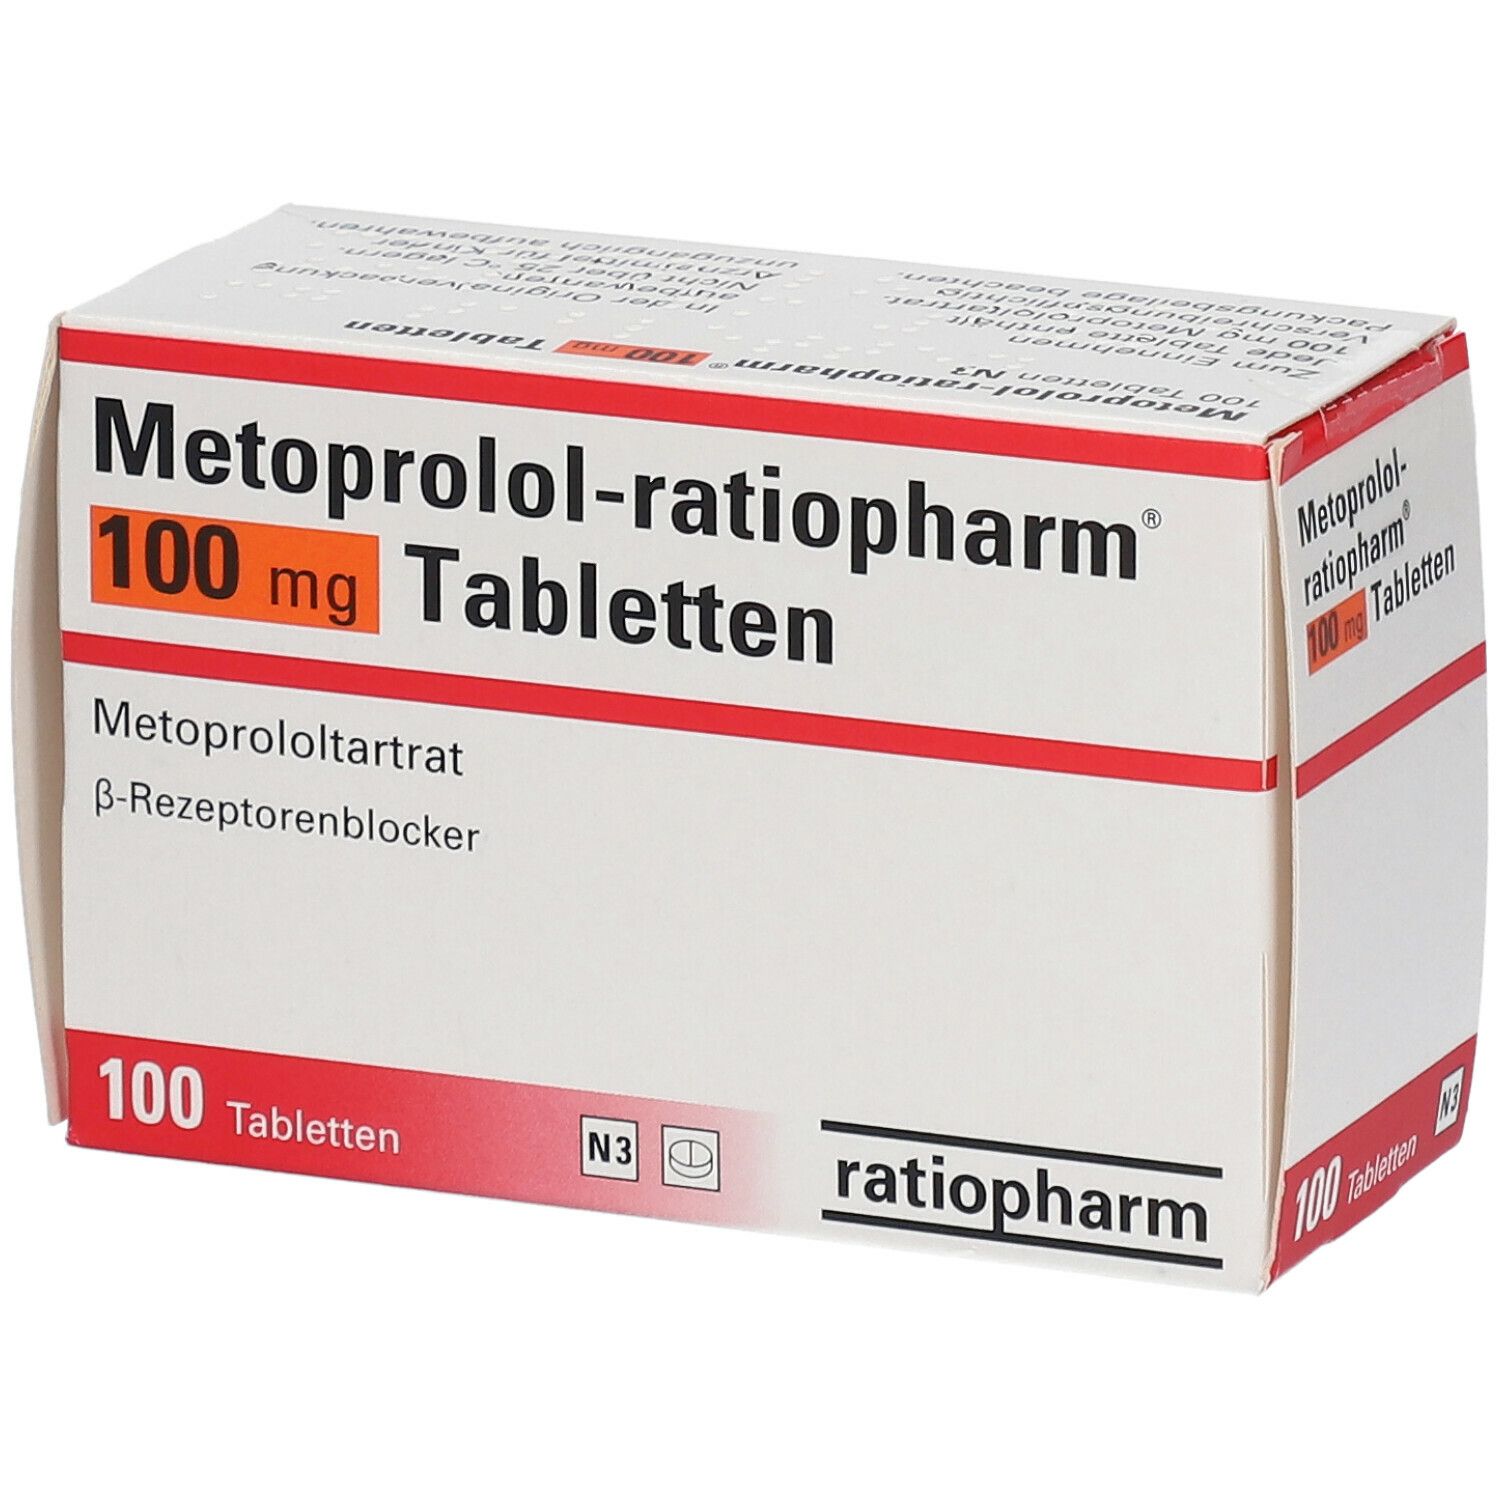 Metoprolol-ratiopharm® 100 mg